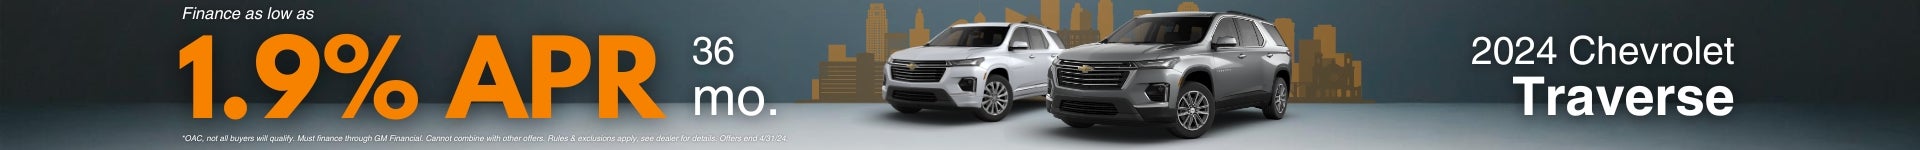 2024 Chevrolet Traverse APR Offer